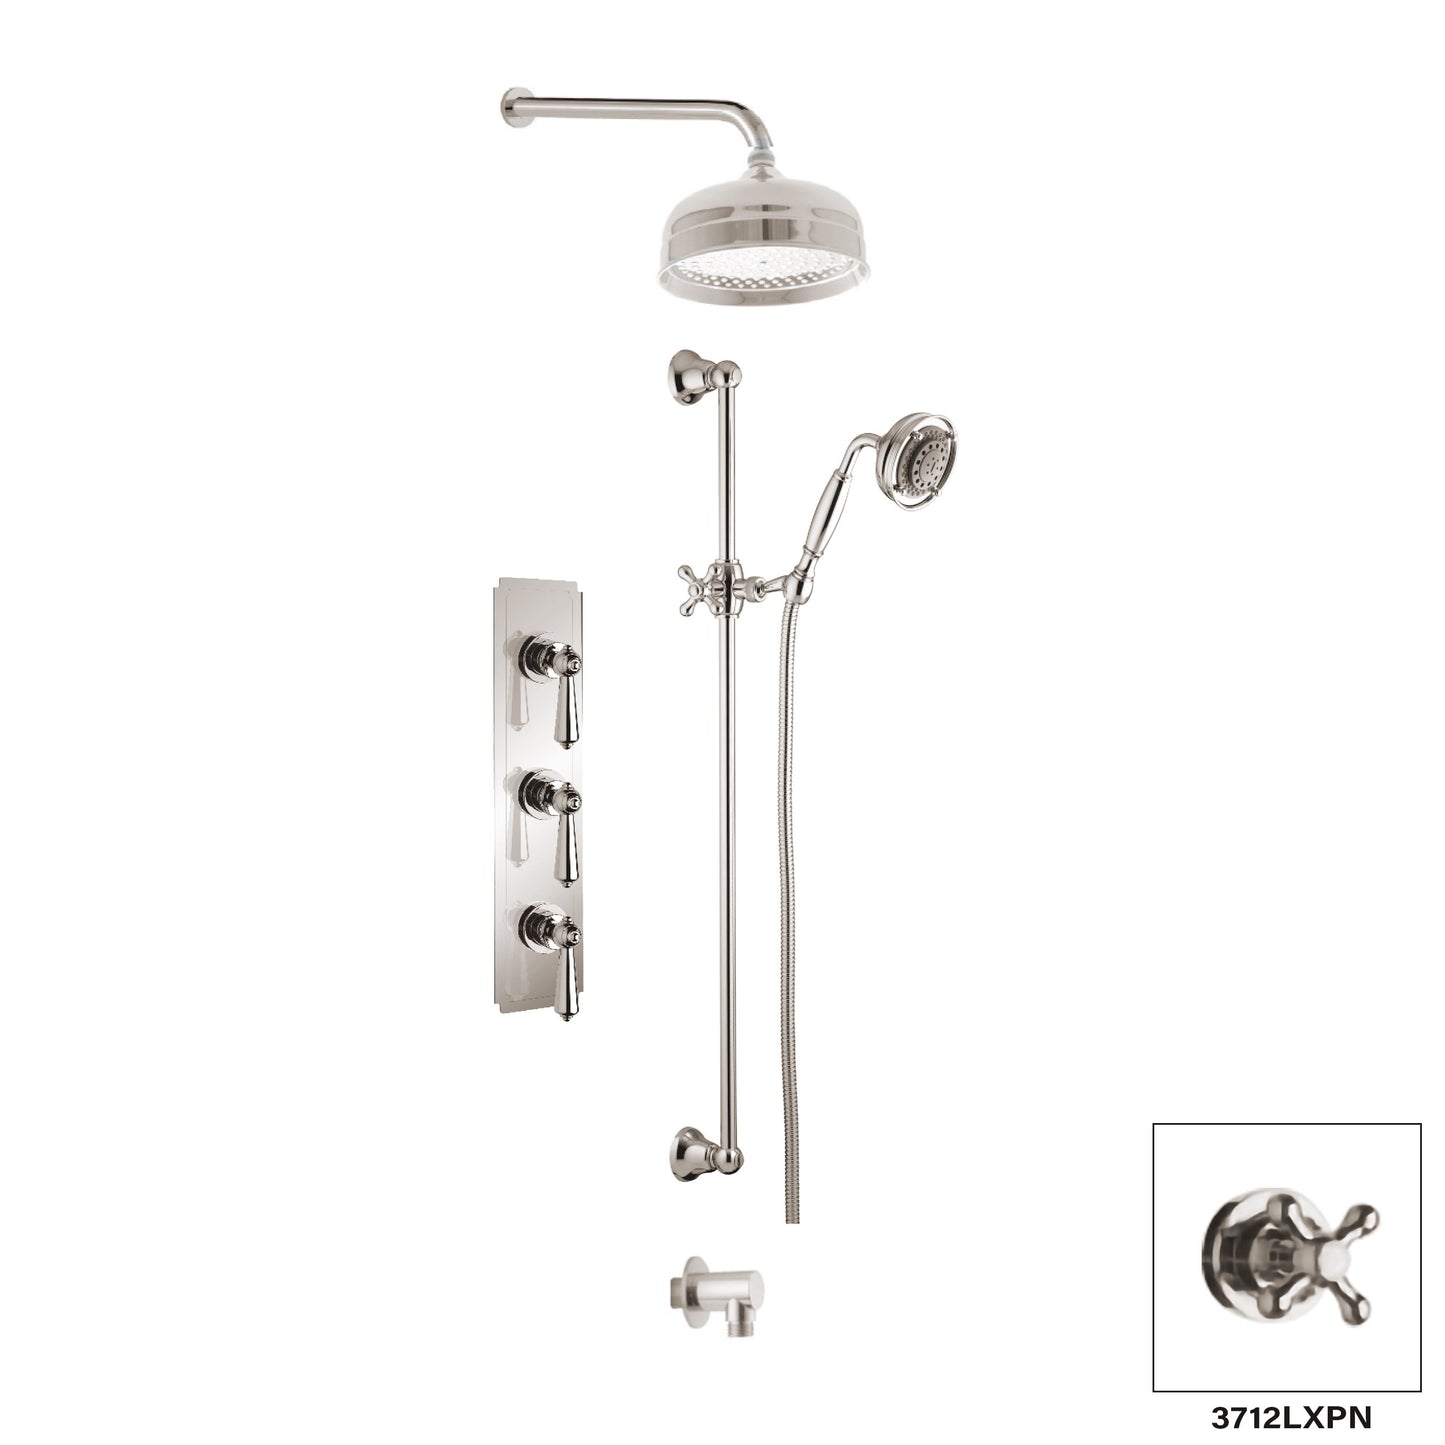 Aquadesign Products Shower Kits (London 3712LL) - Polished Nickel